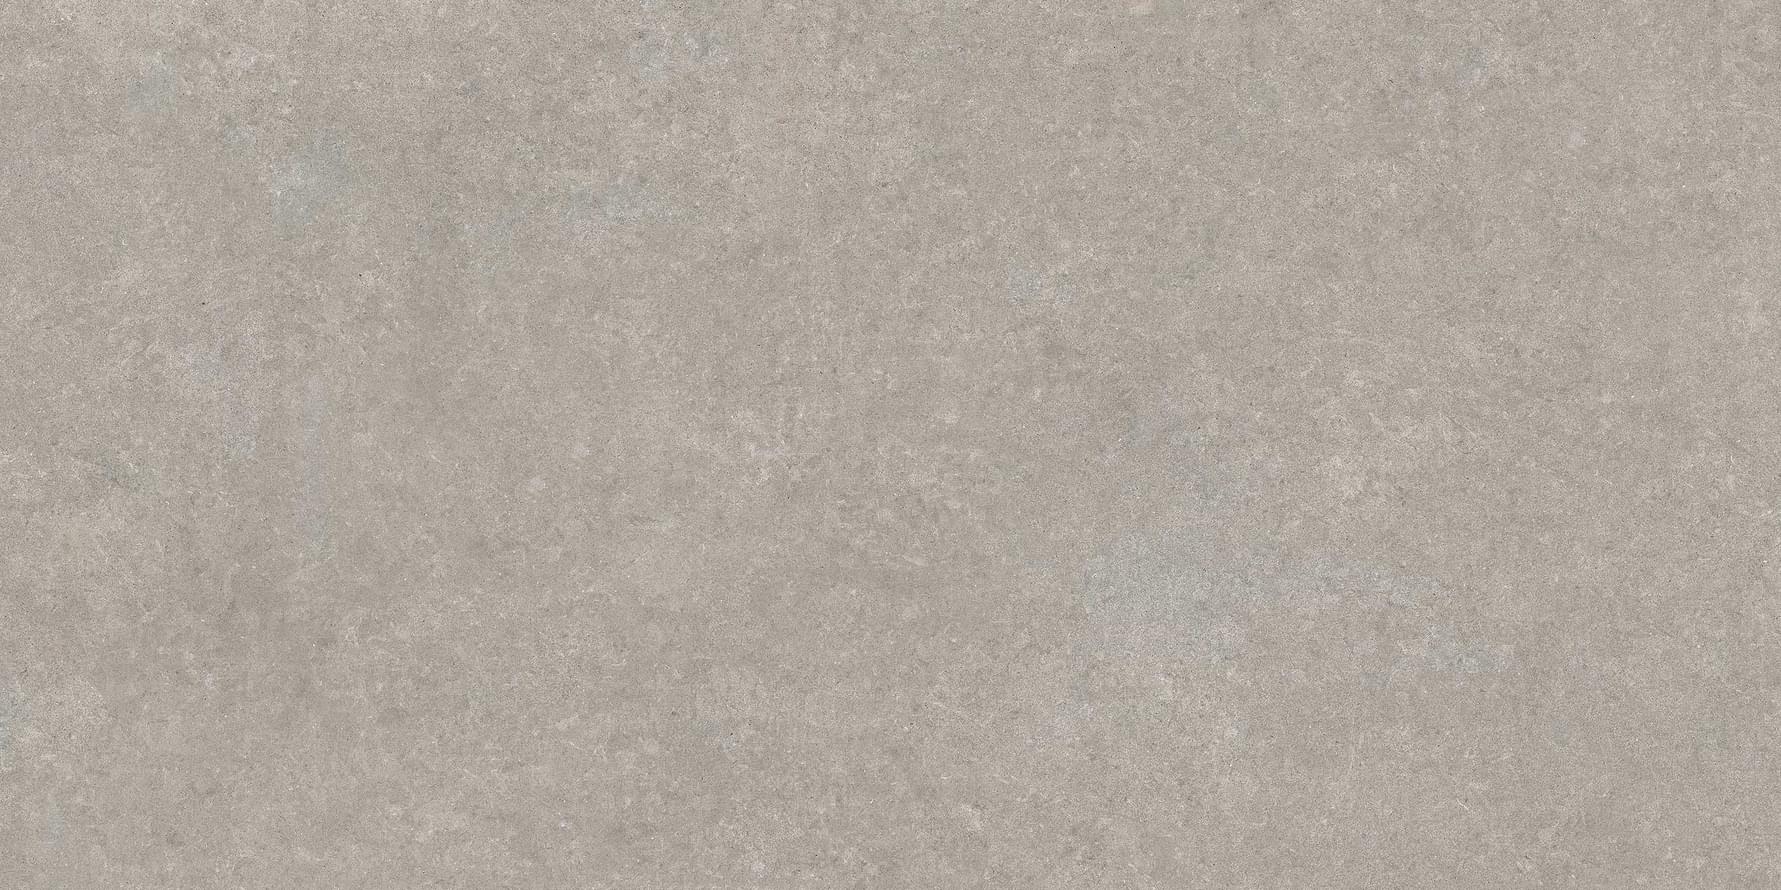 Cerim Elemental Stone Grey Sandstone Grip 30x60